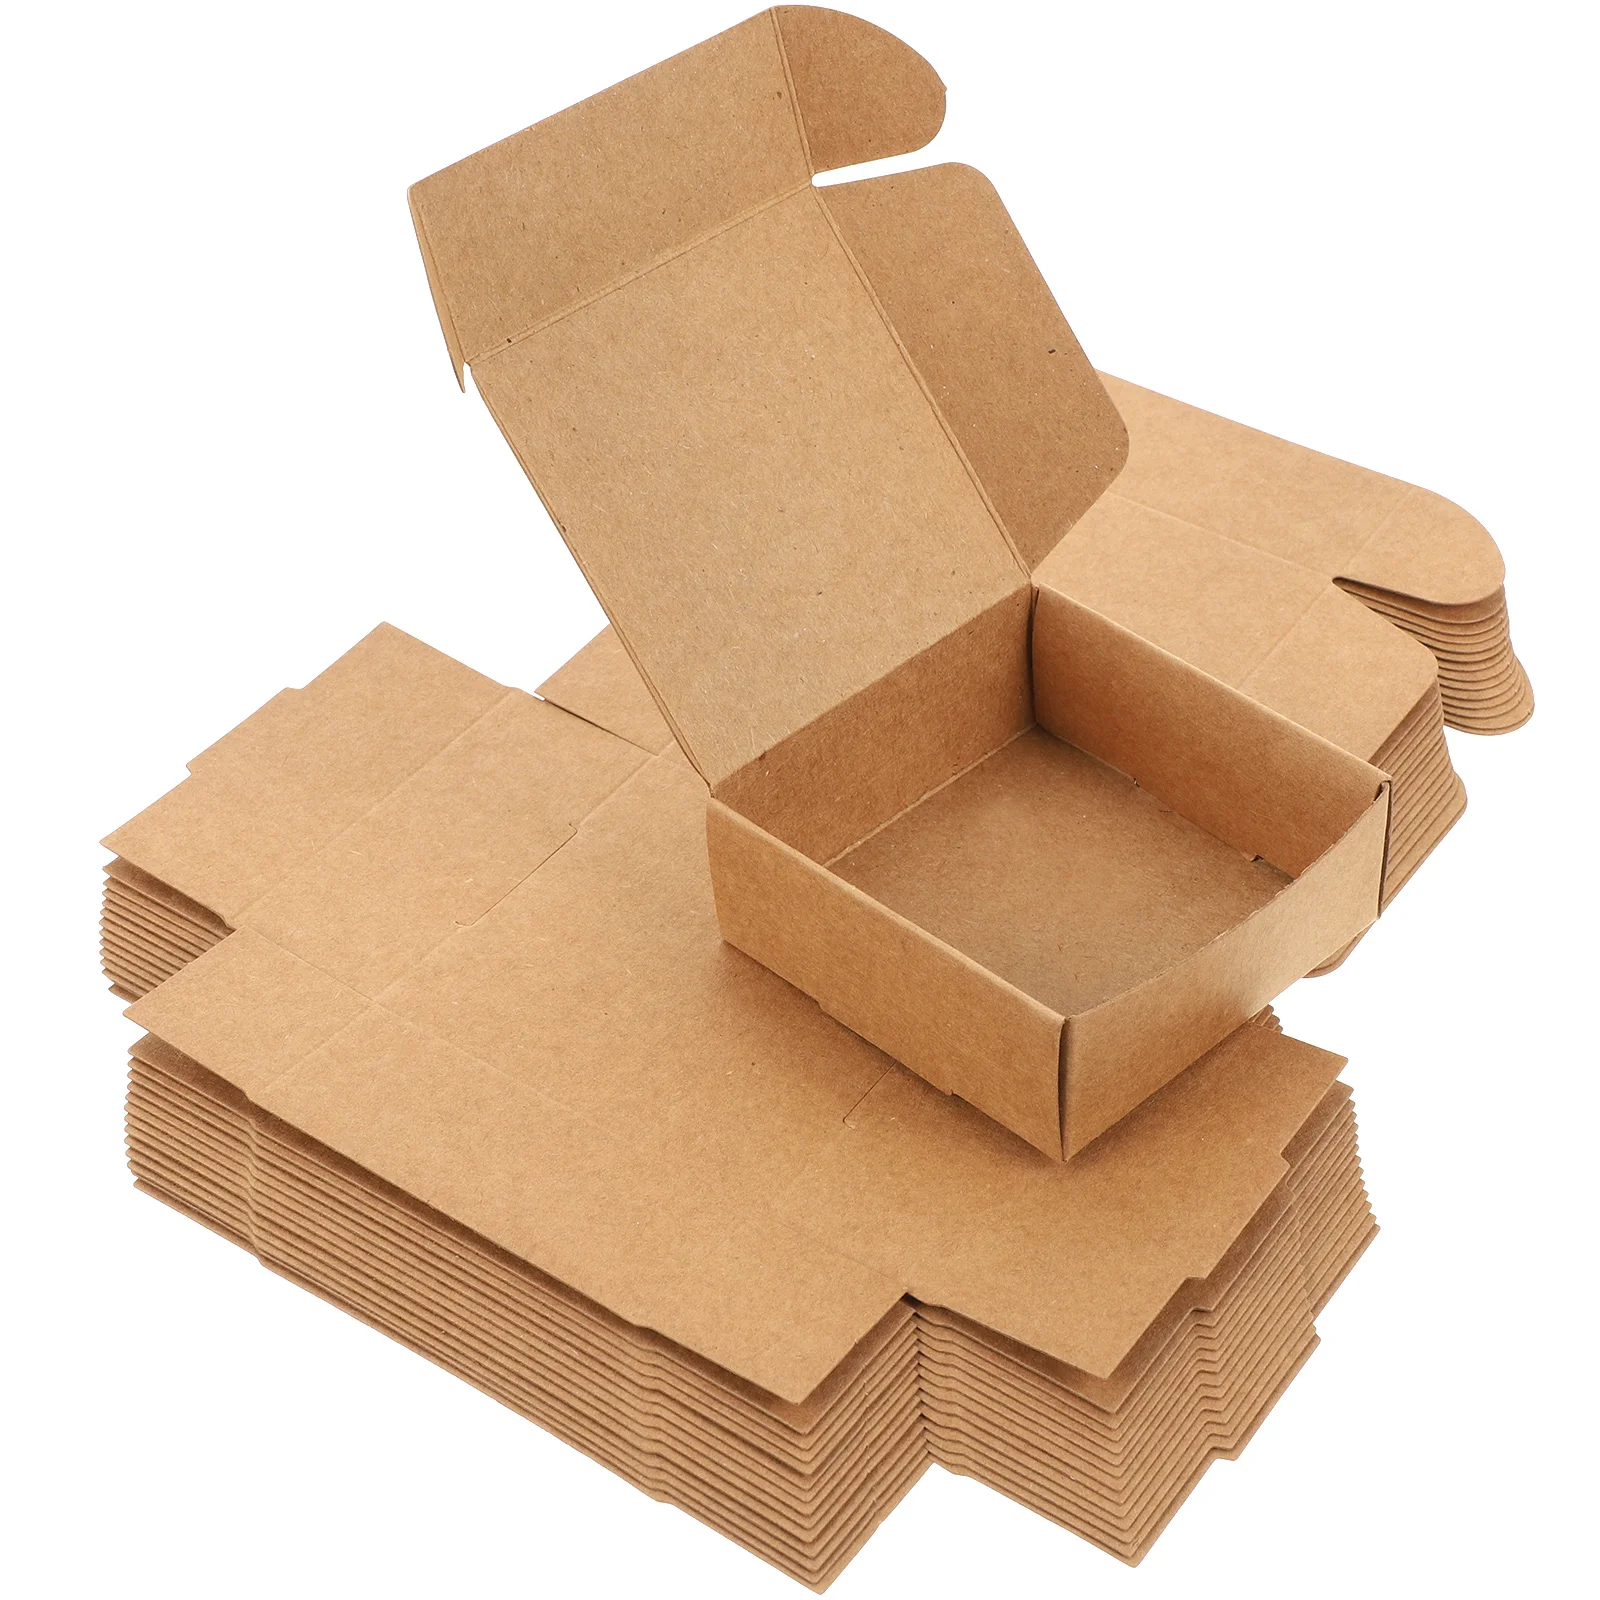 UBoxes 10 Medium Cardboard Moving Boxes 18 x 14 x12